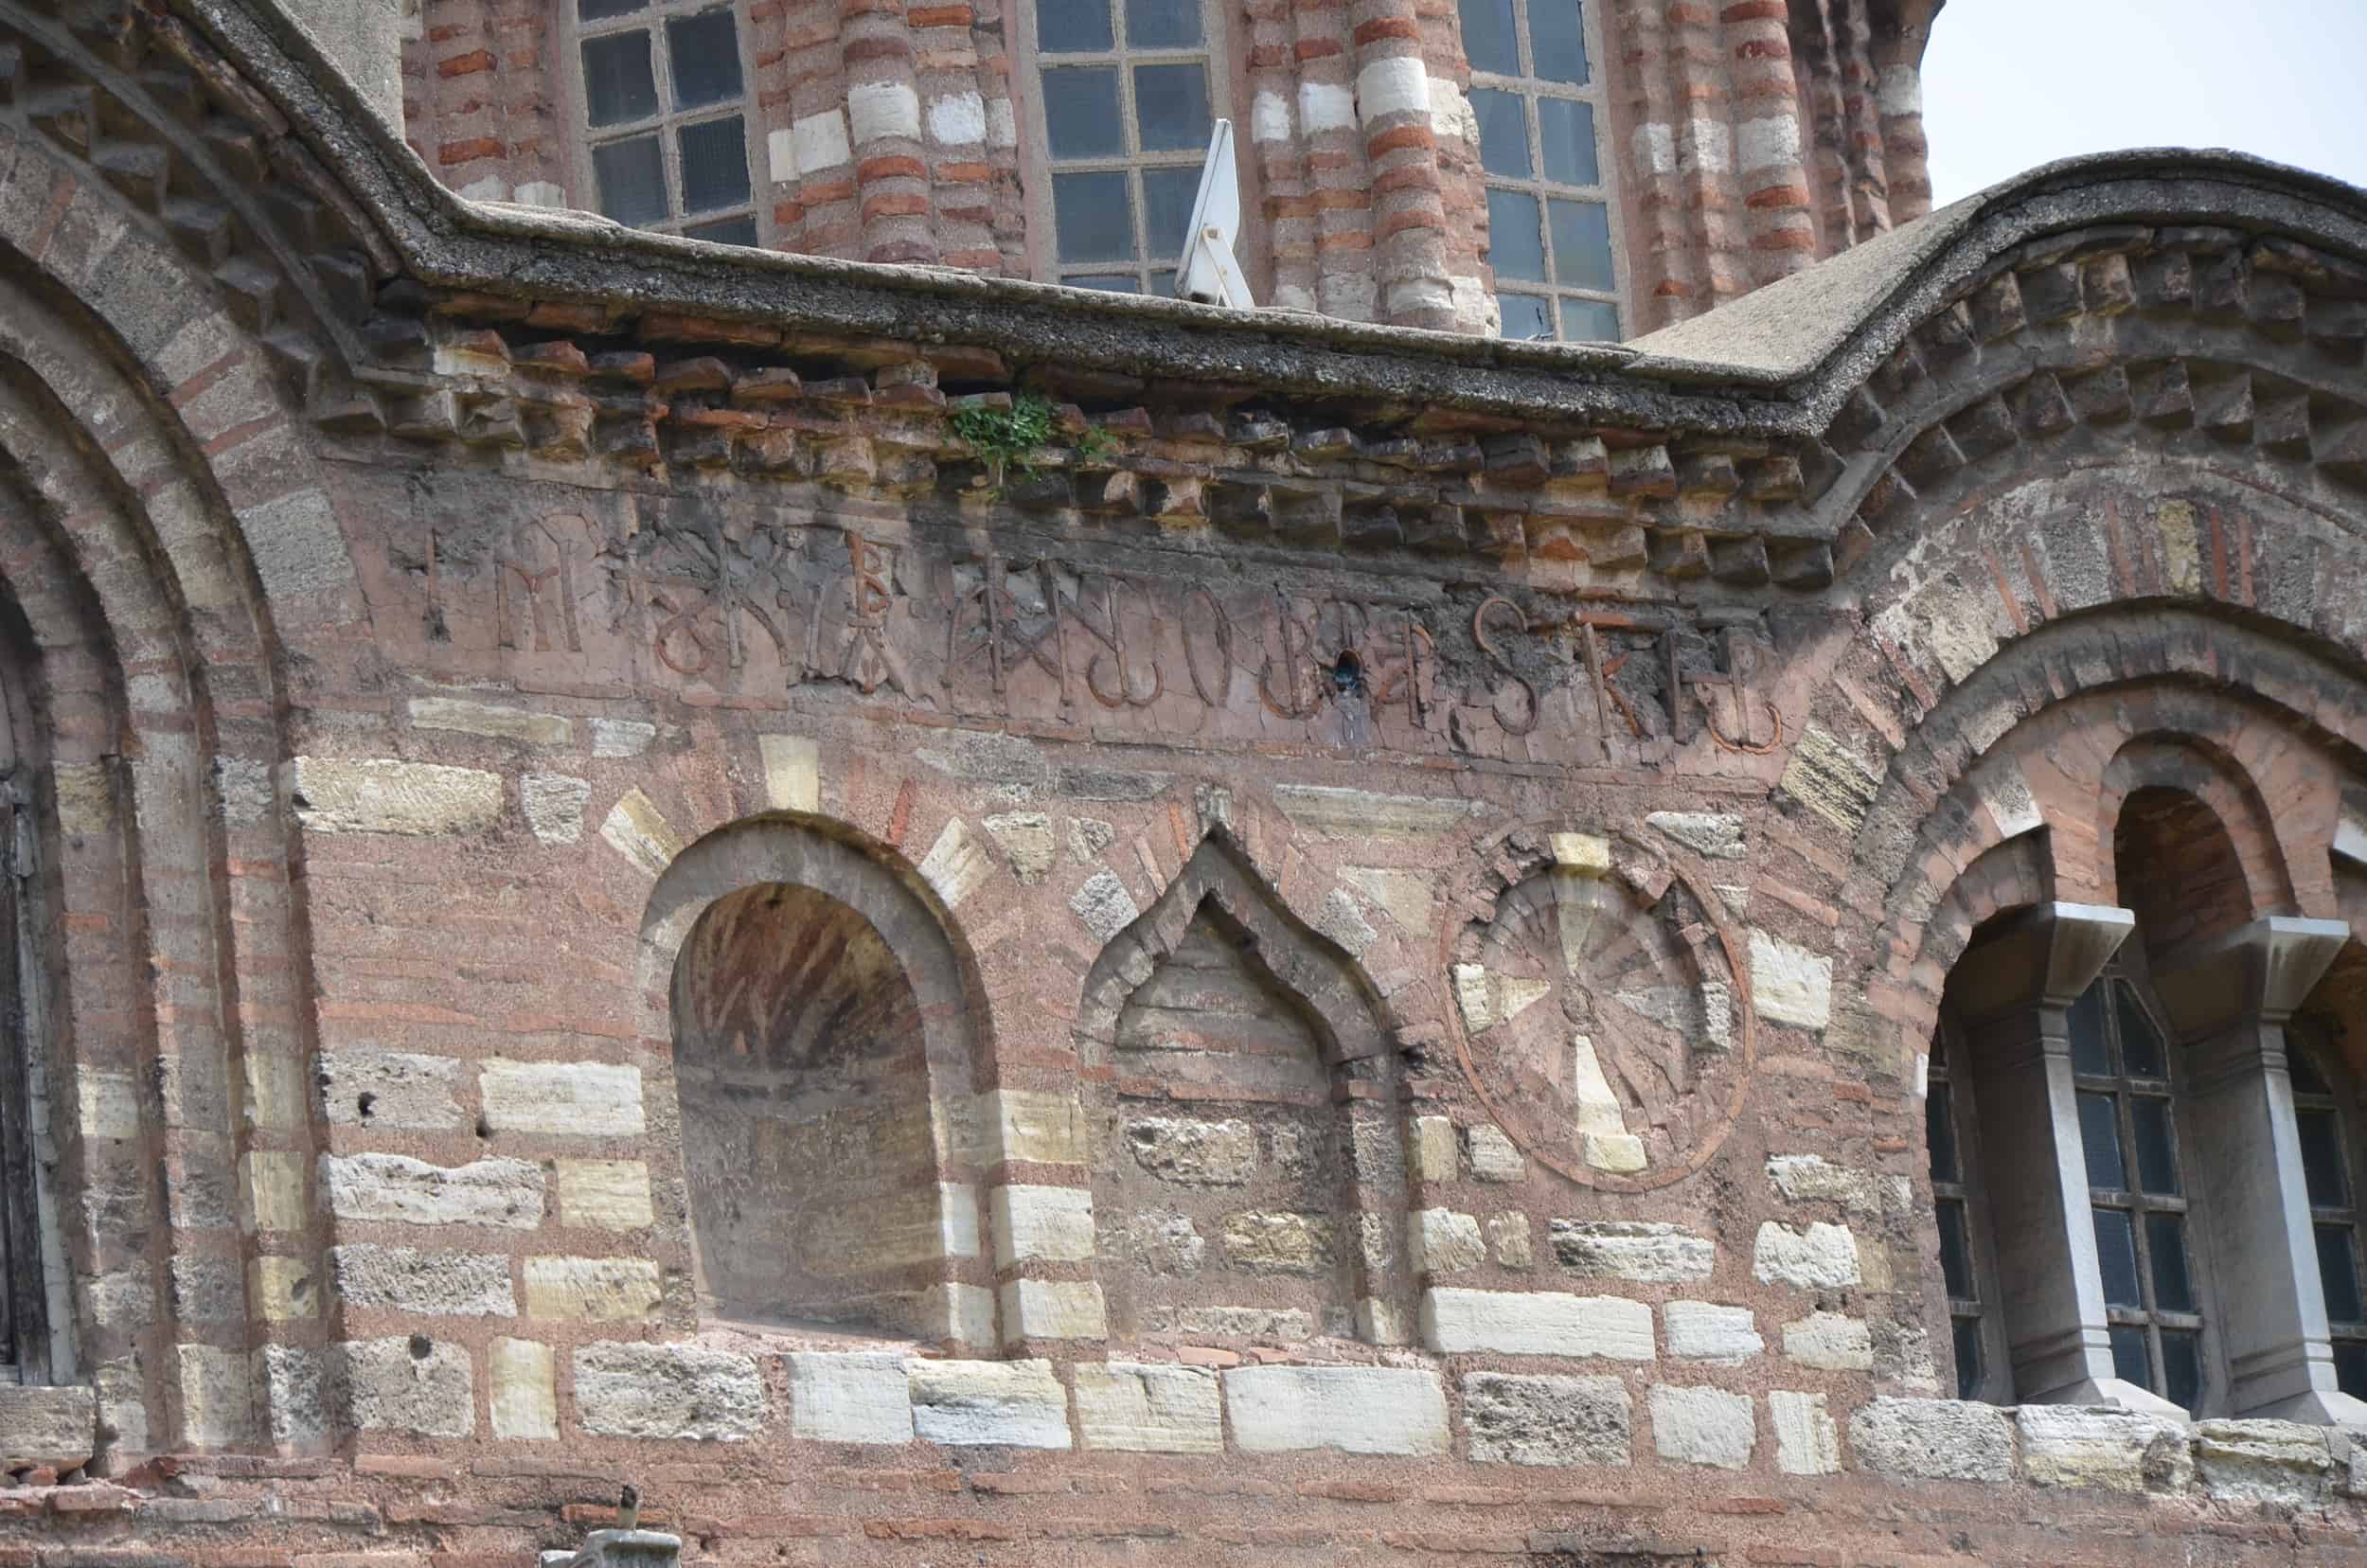 Inscription on the exterior